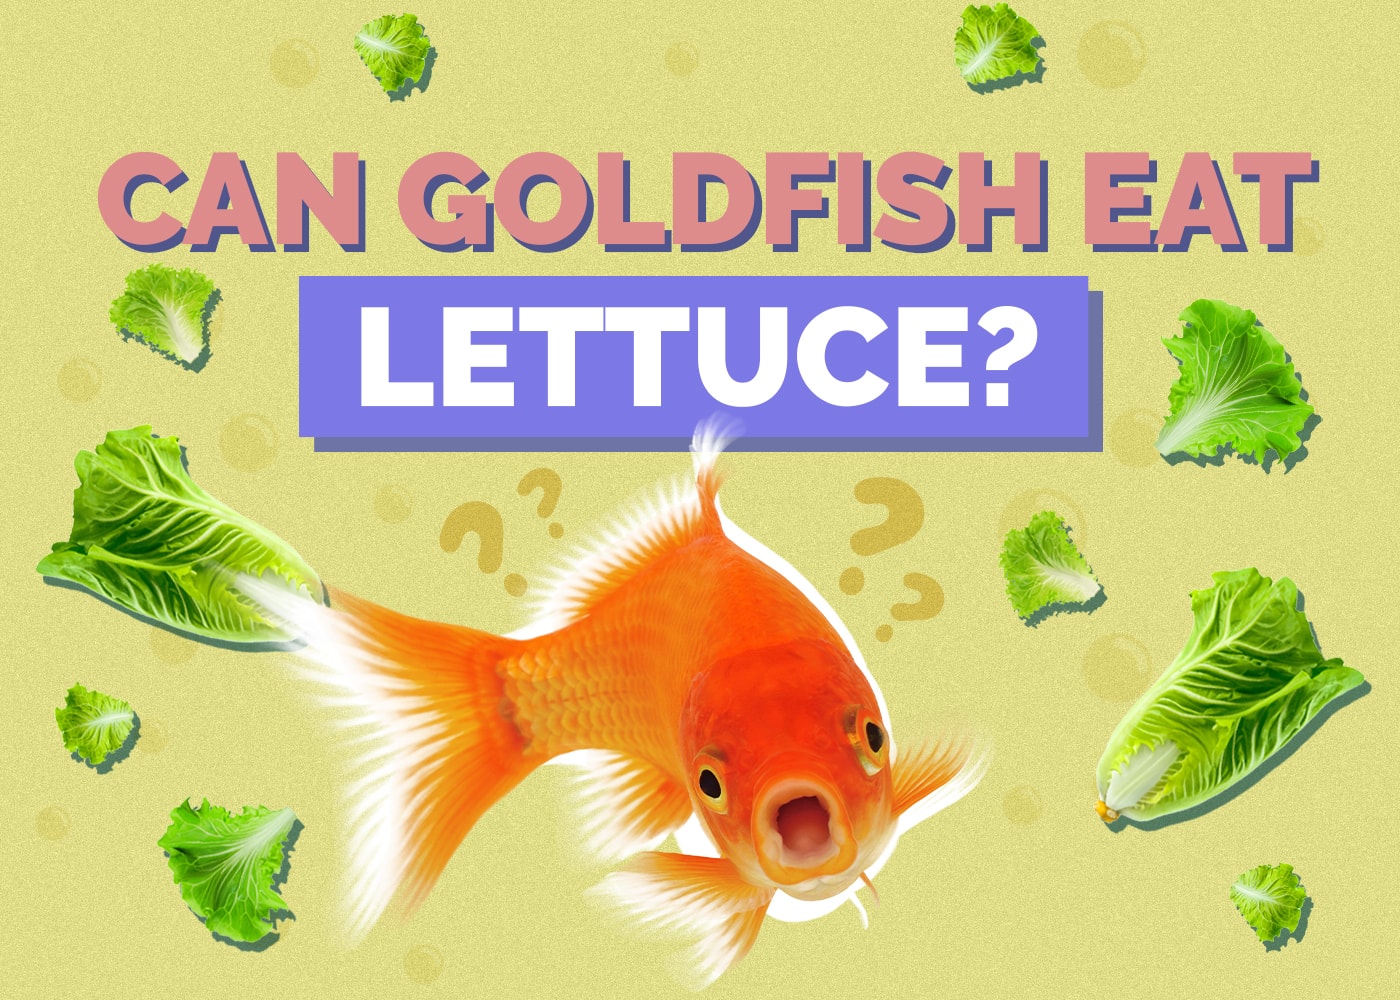 goldfish-lettuce